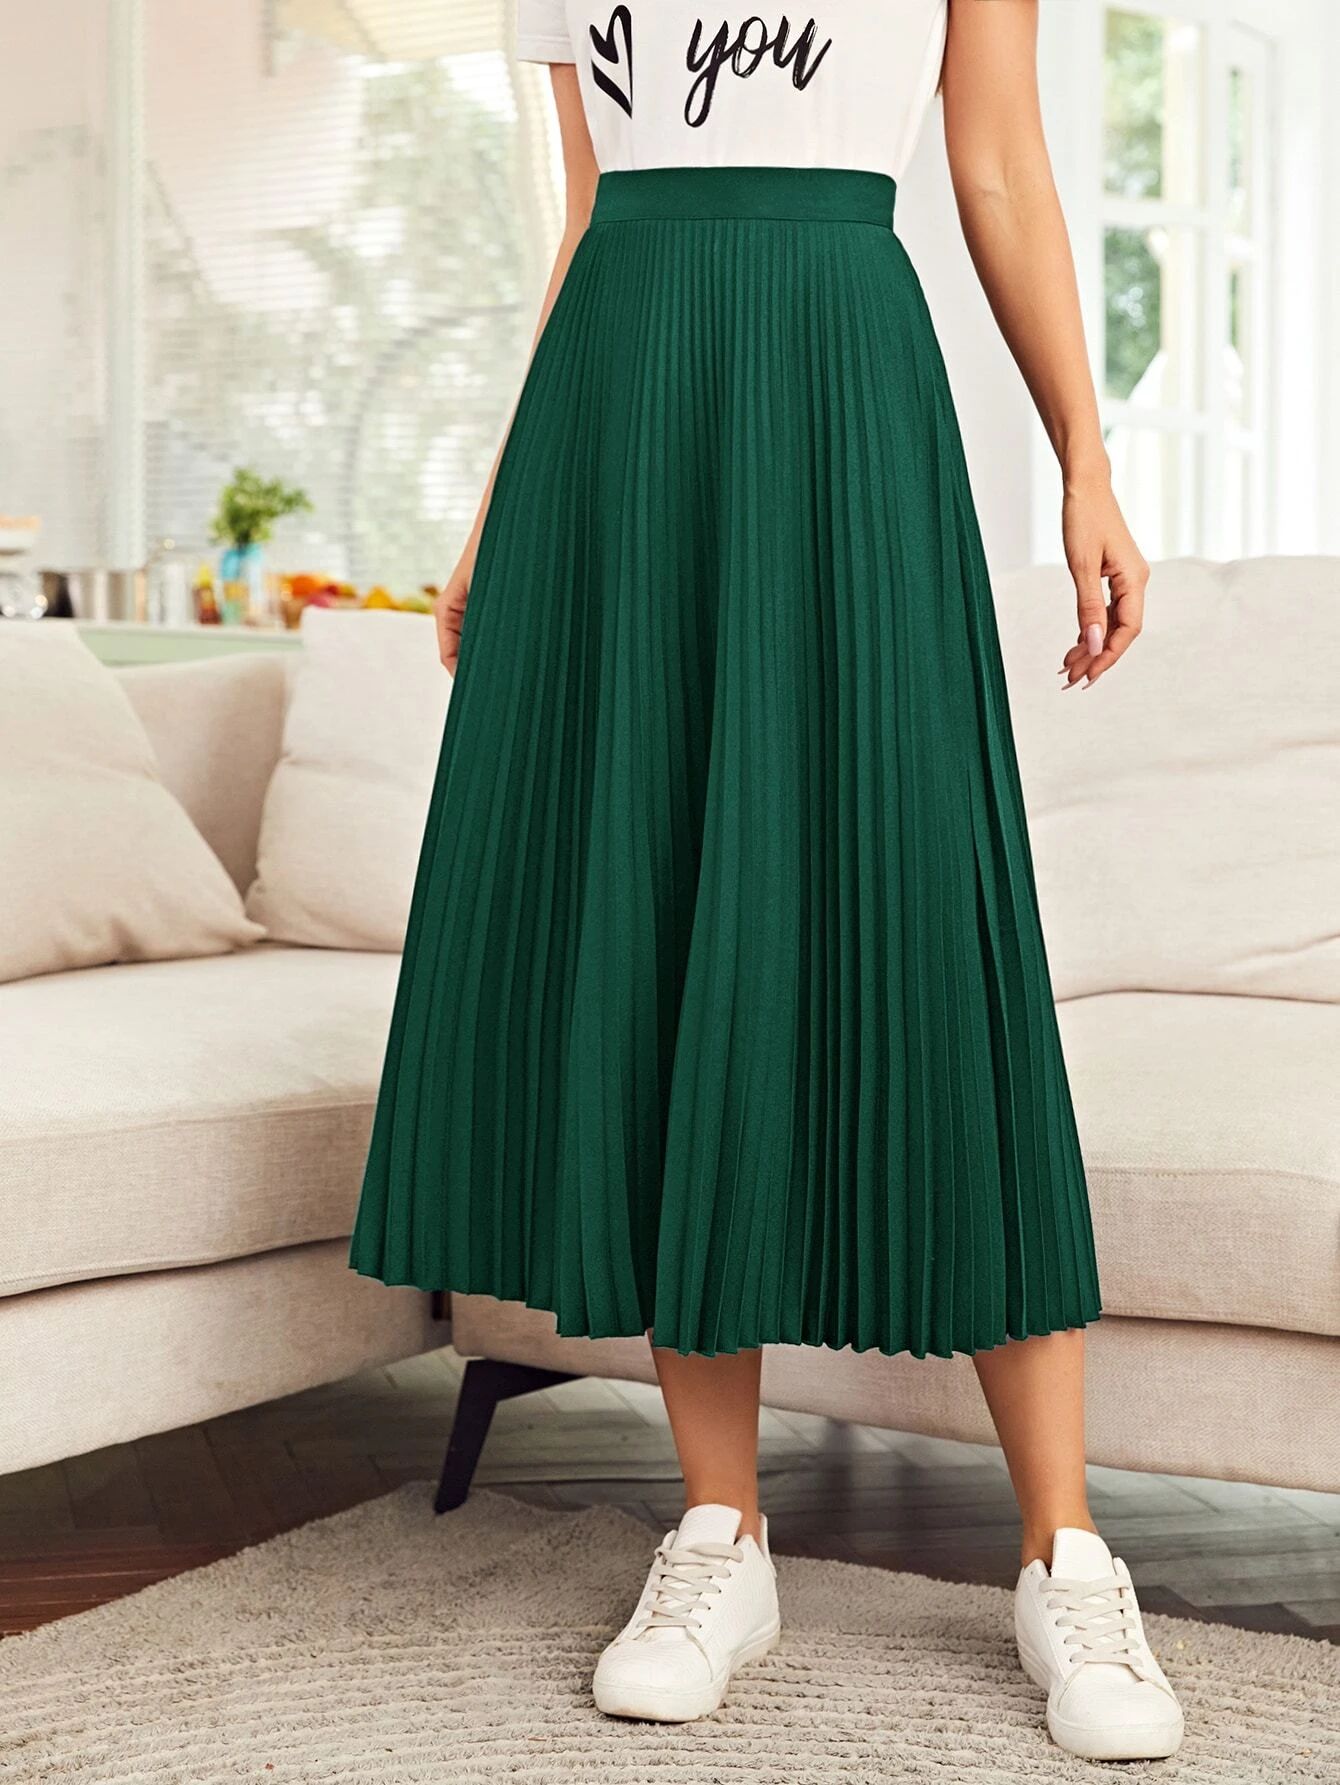 SHEIN High Waist Solid Pleated Skirt | SHEIN